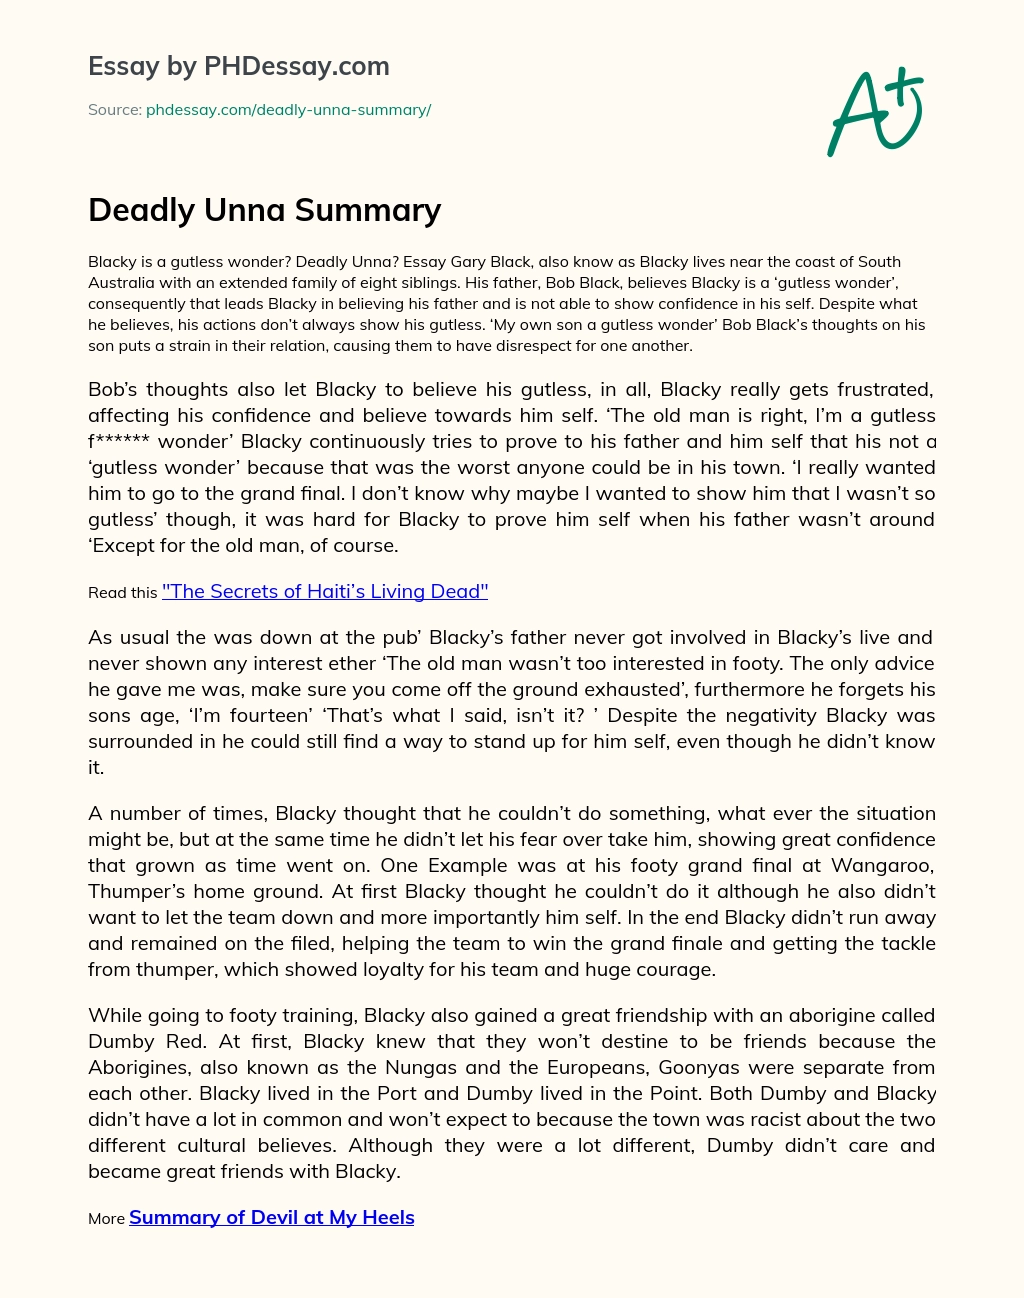 Deadly Unna Summary essay